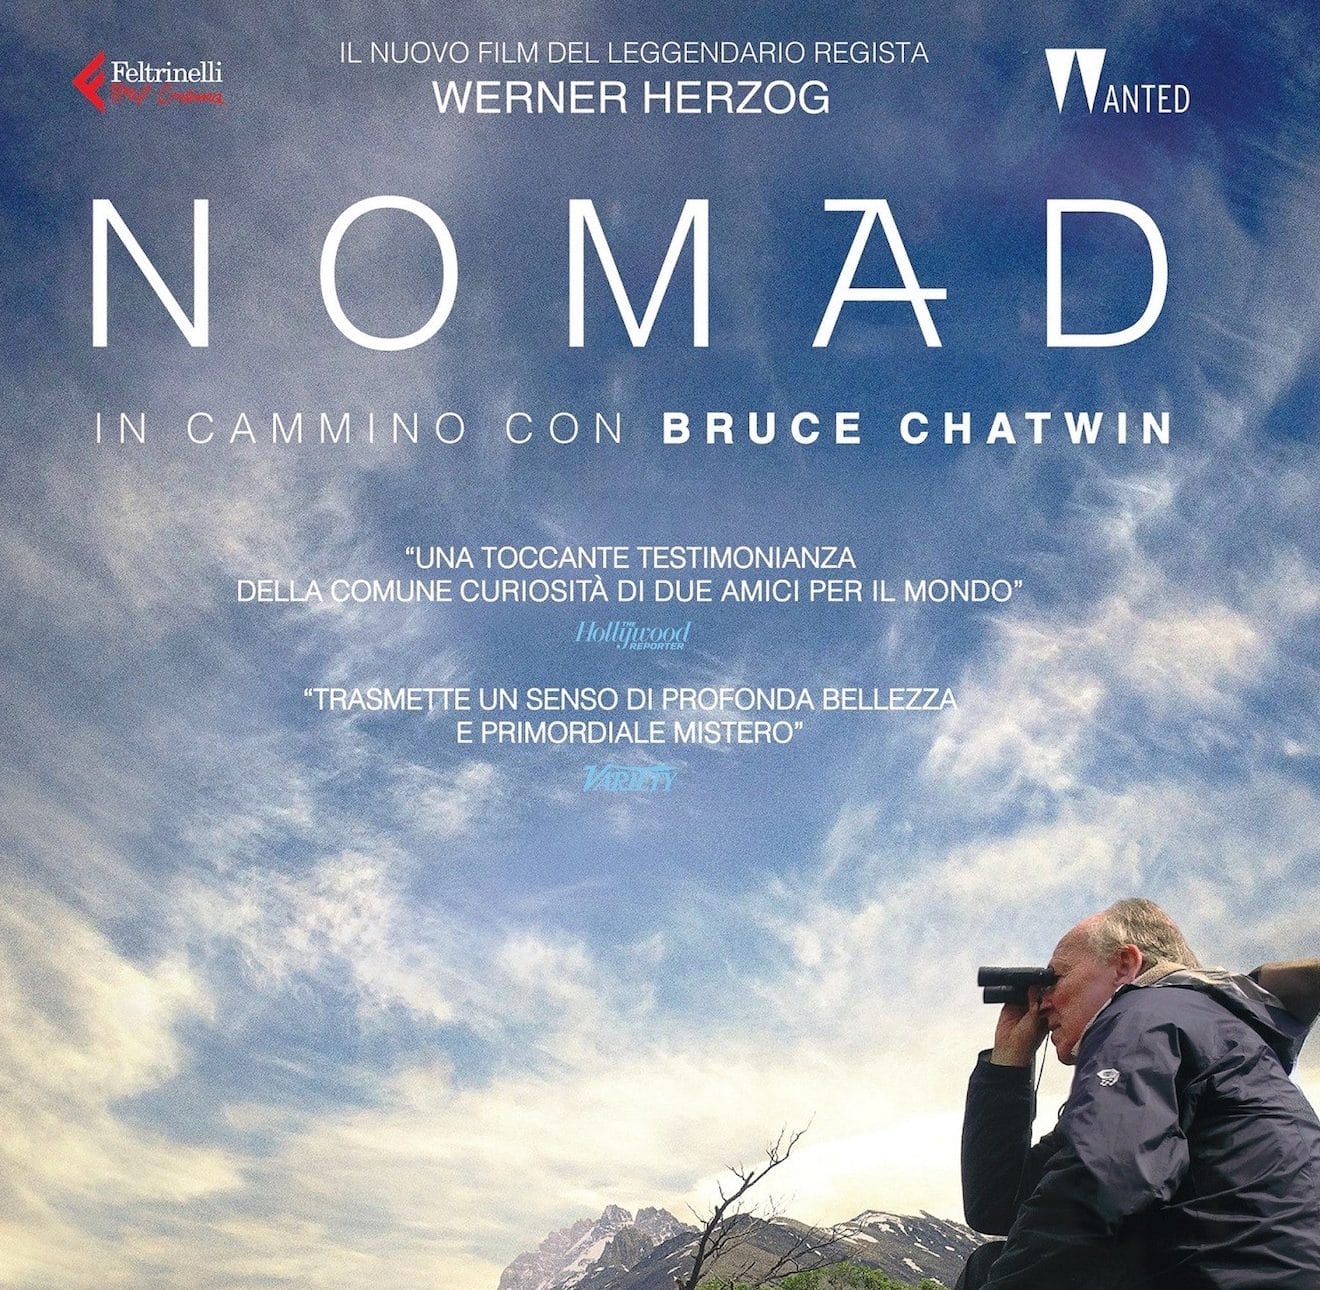 Nomad – In cammino con Bruce Chatwin